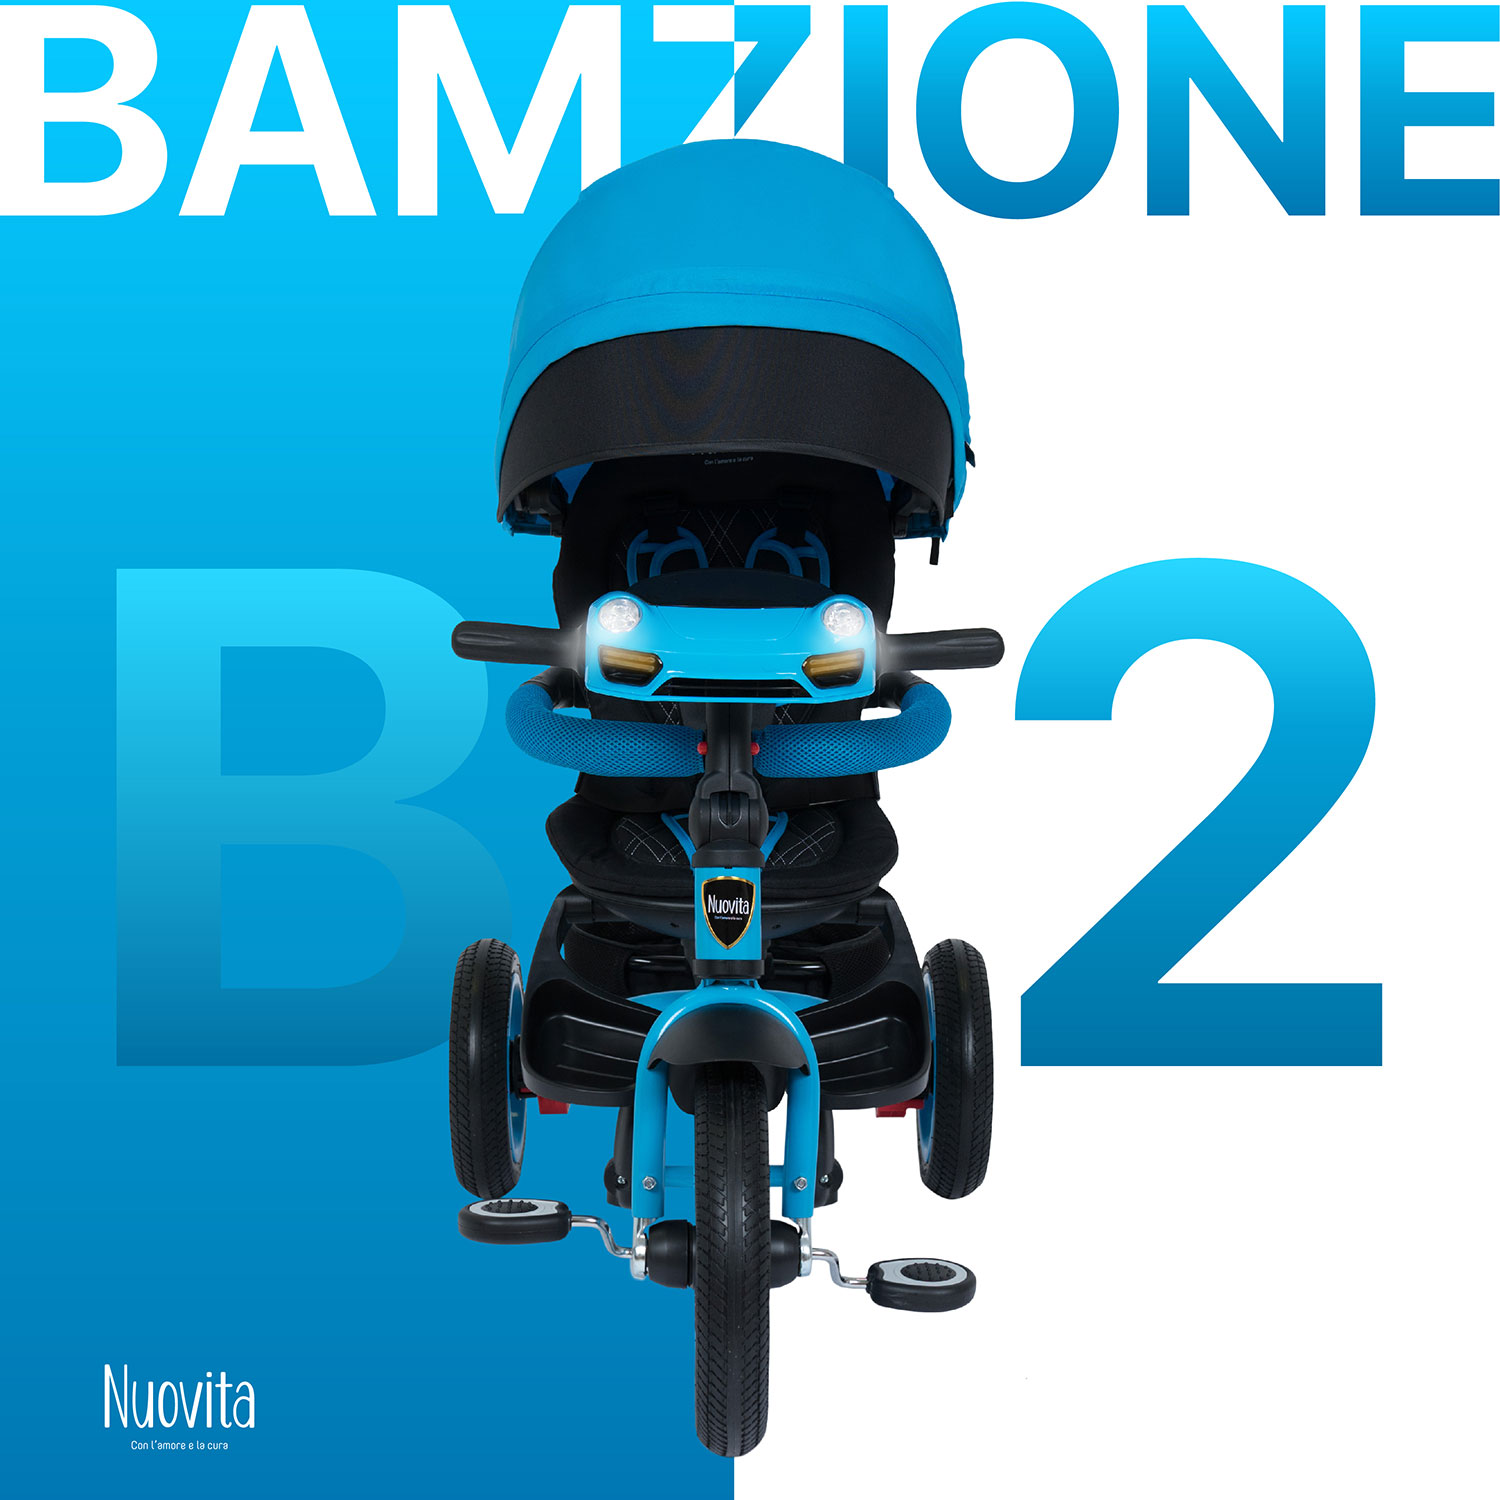 Трехколесный велосипед Nuovita Bamzione B2 Blu/Синий трехколесный велосипед nuovita bamzione b2 rosso красный